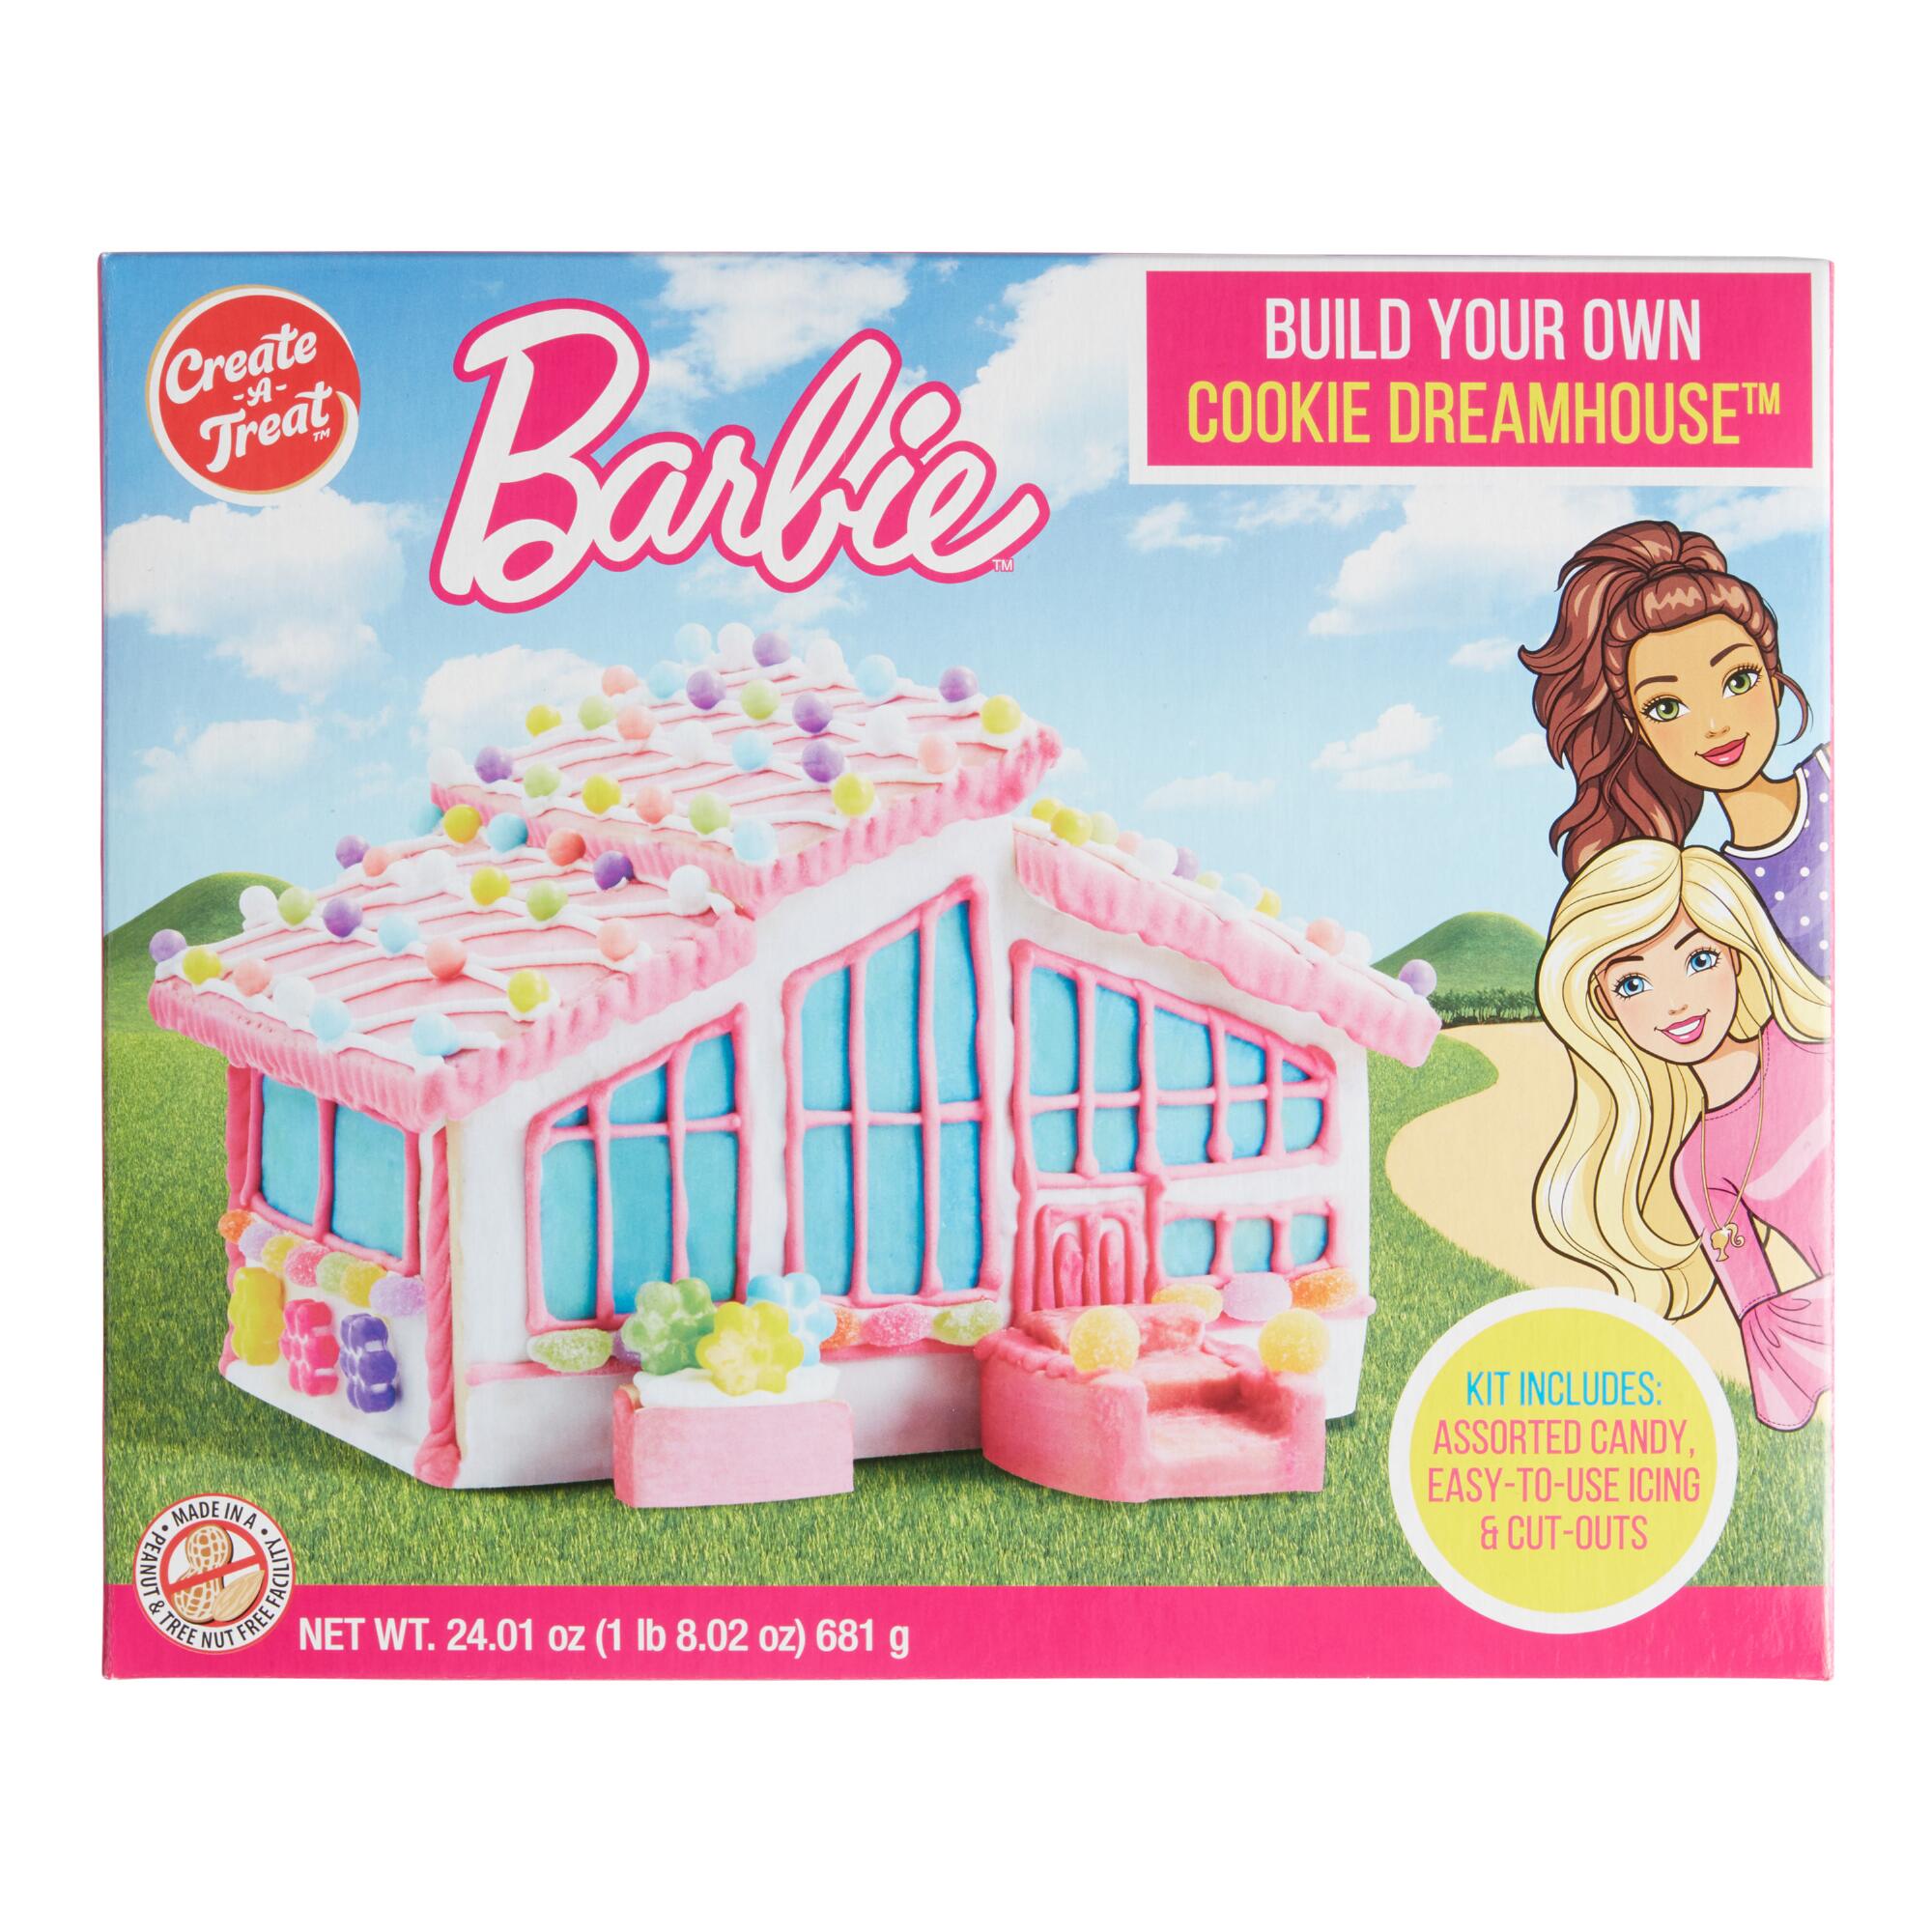 Barbie Cookie Dreamhouse Kit by World Market